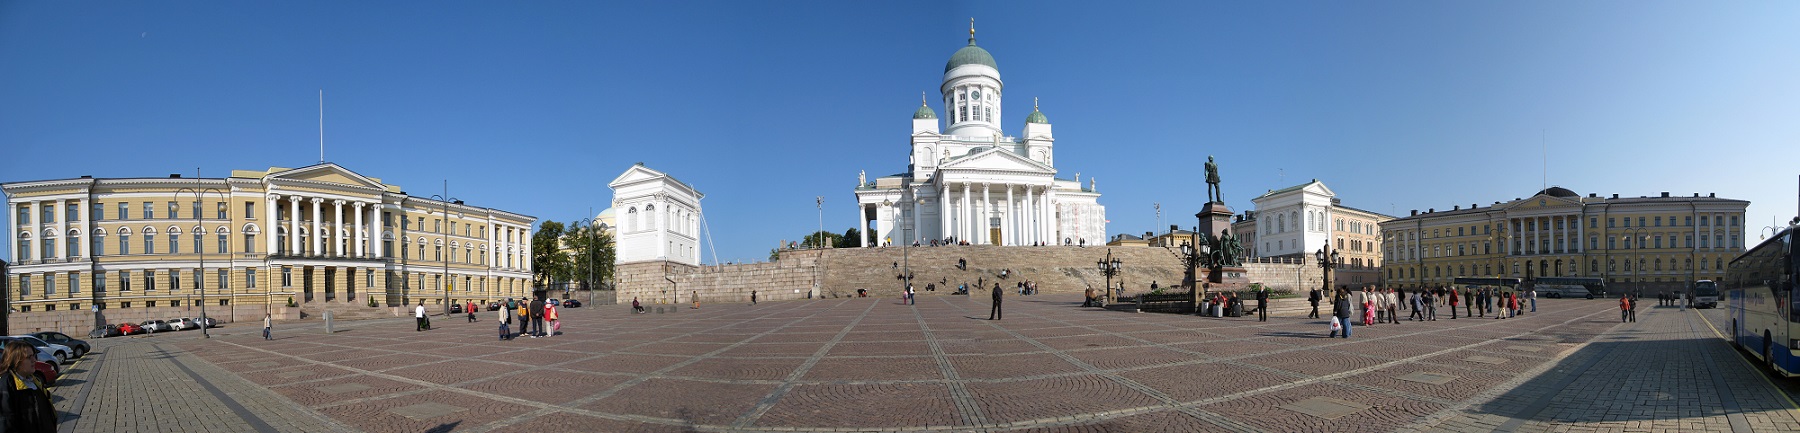 Senate Square Senaatintori Senatstorget Helsinki Finland